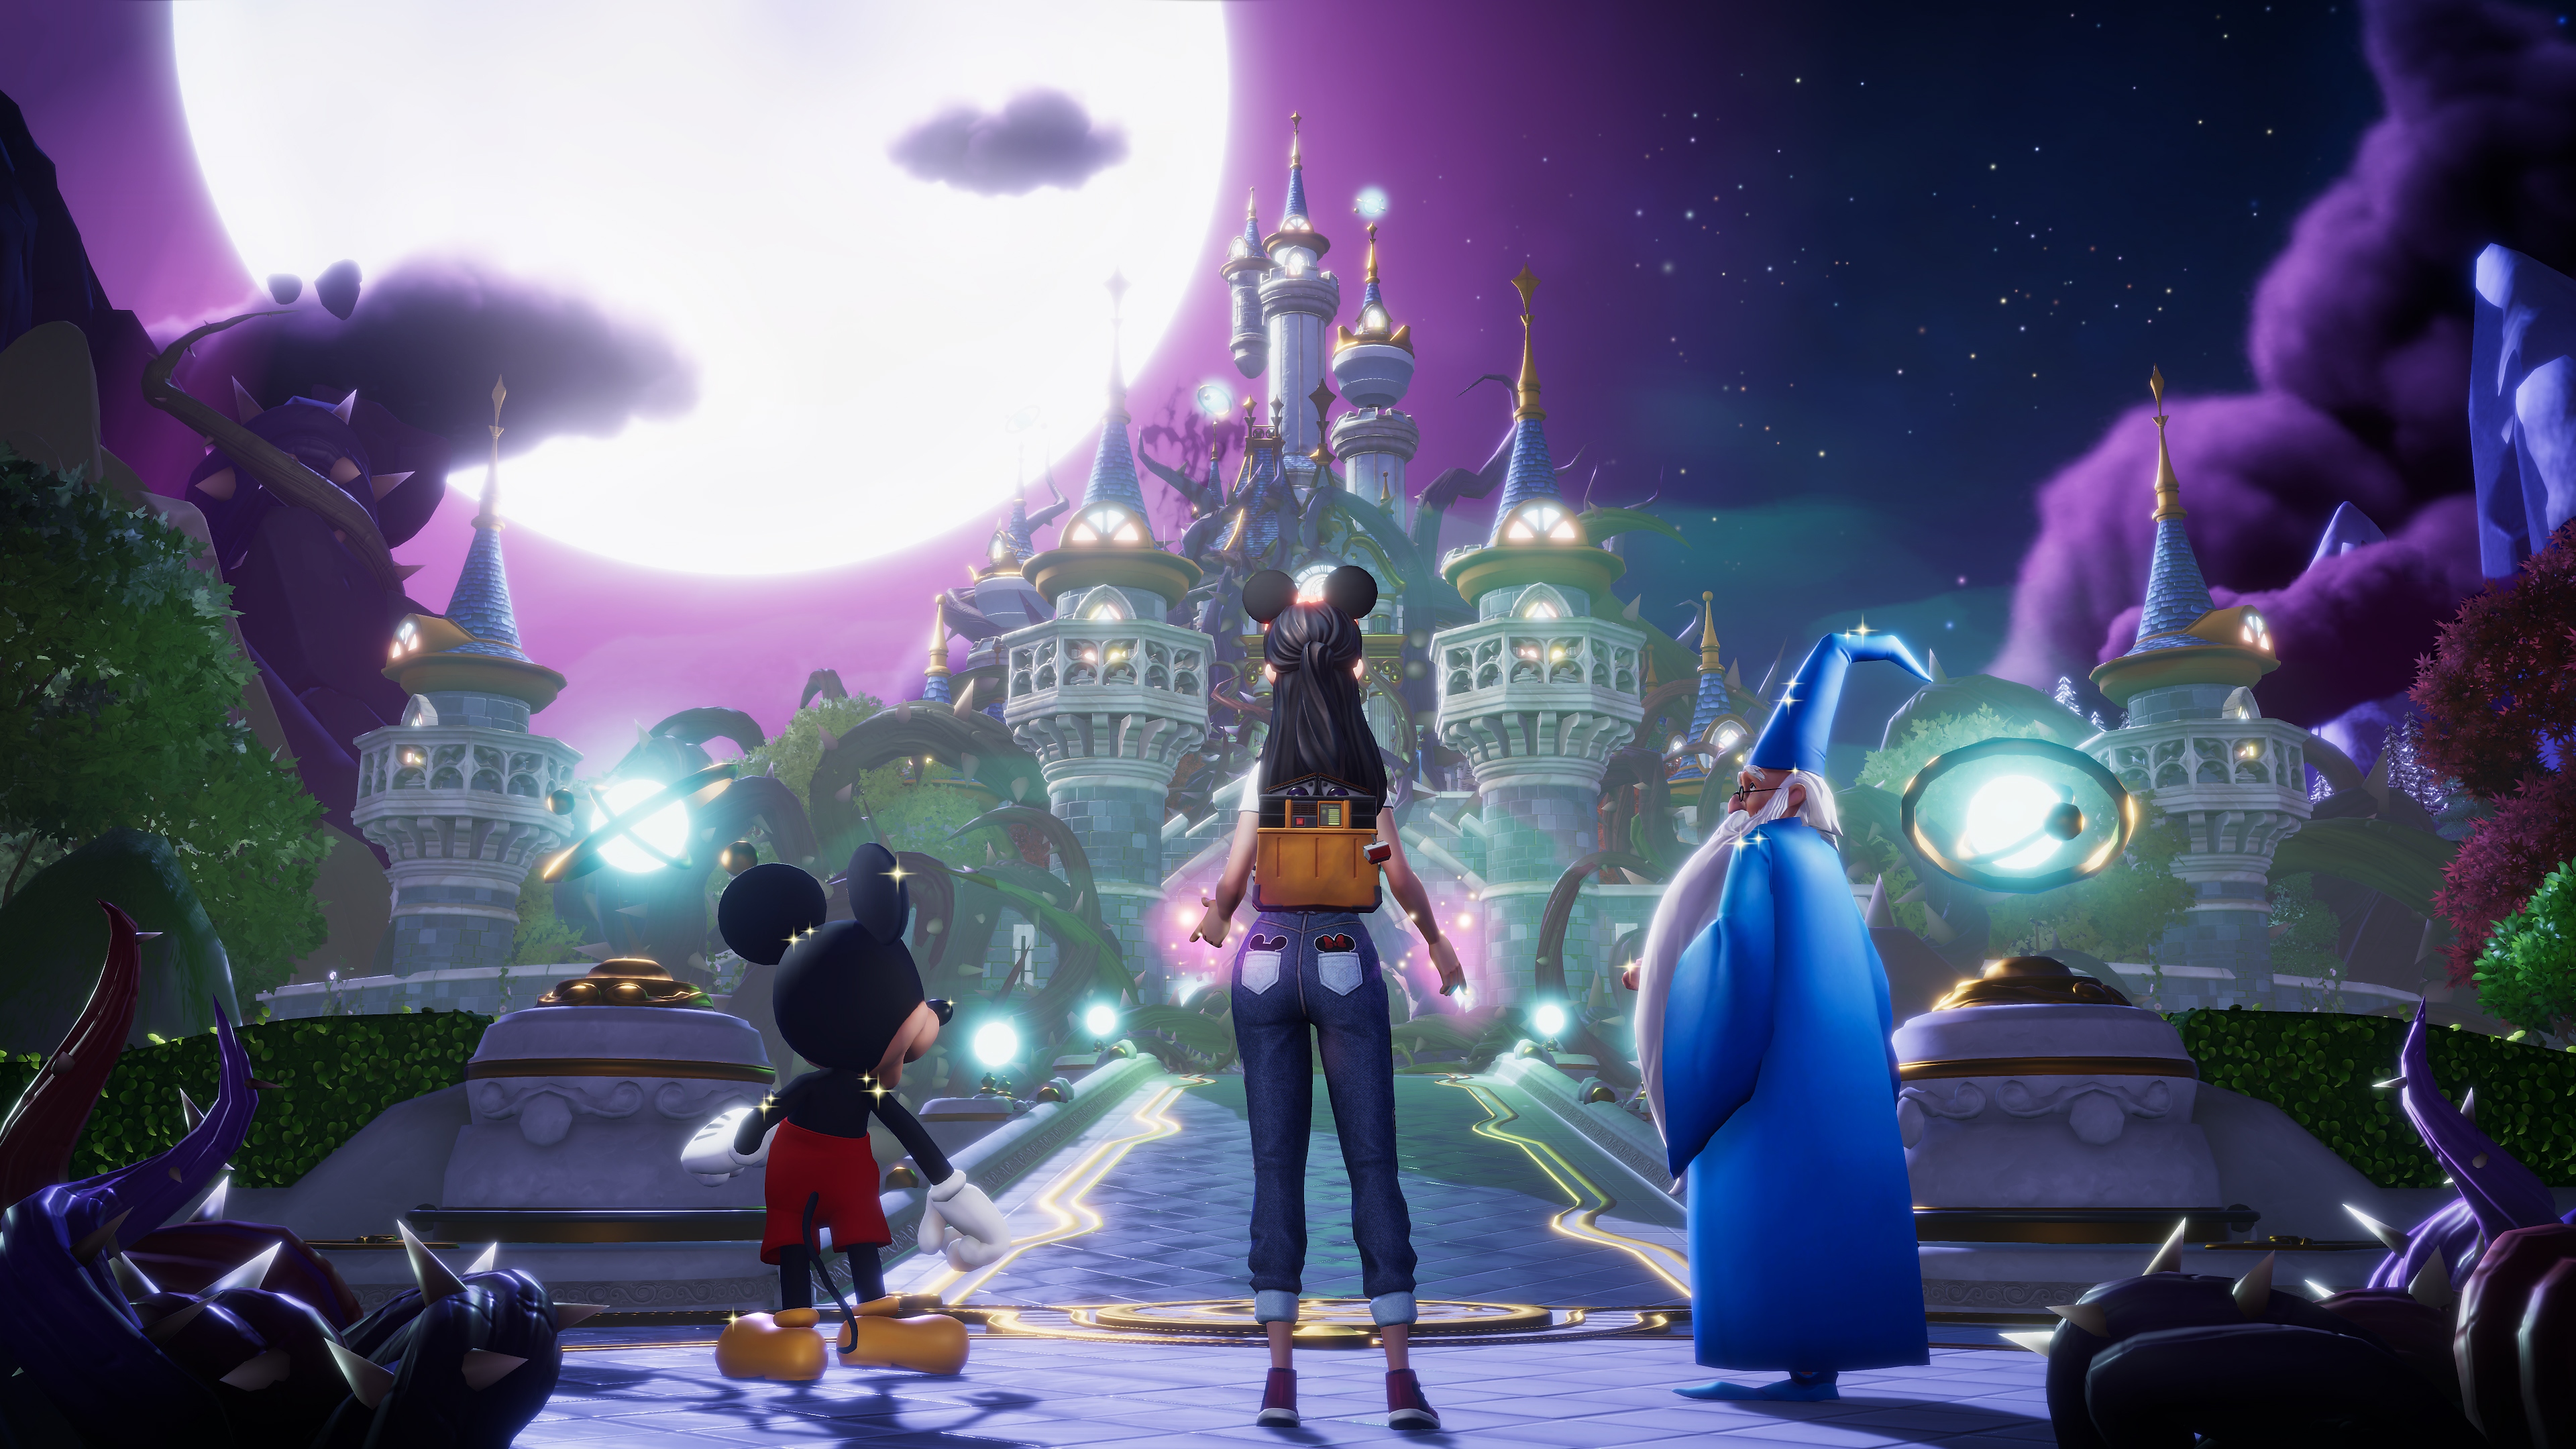 《Disney Dreamlight Valley》螢幕截圖，顯示米老鼠、梅林和一個玩家個人造型在又大又圓的月亮下望向一座城堡